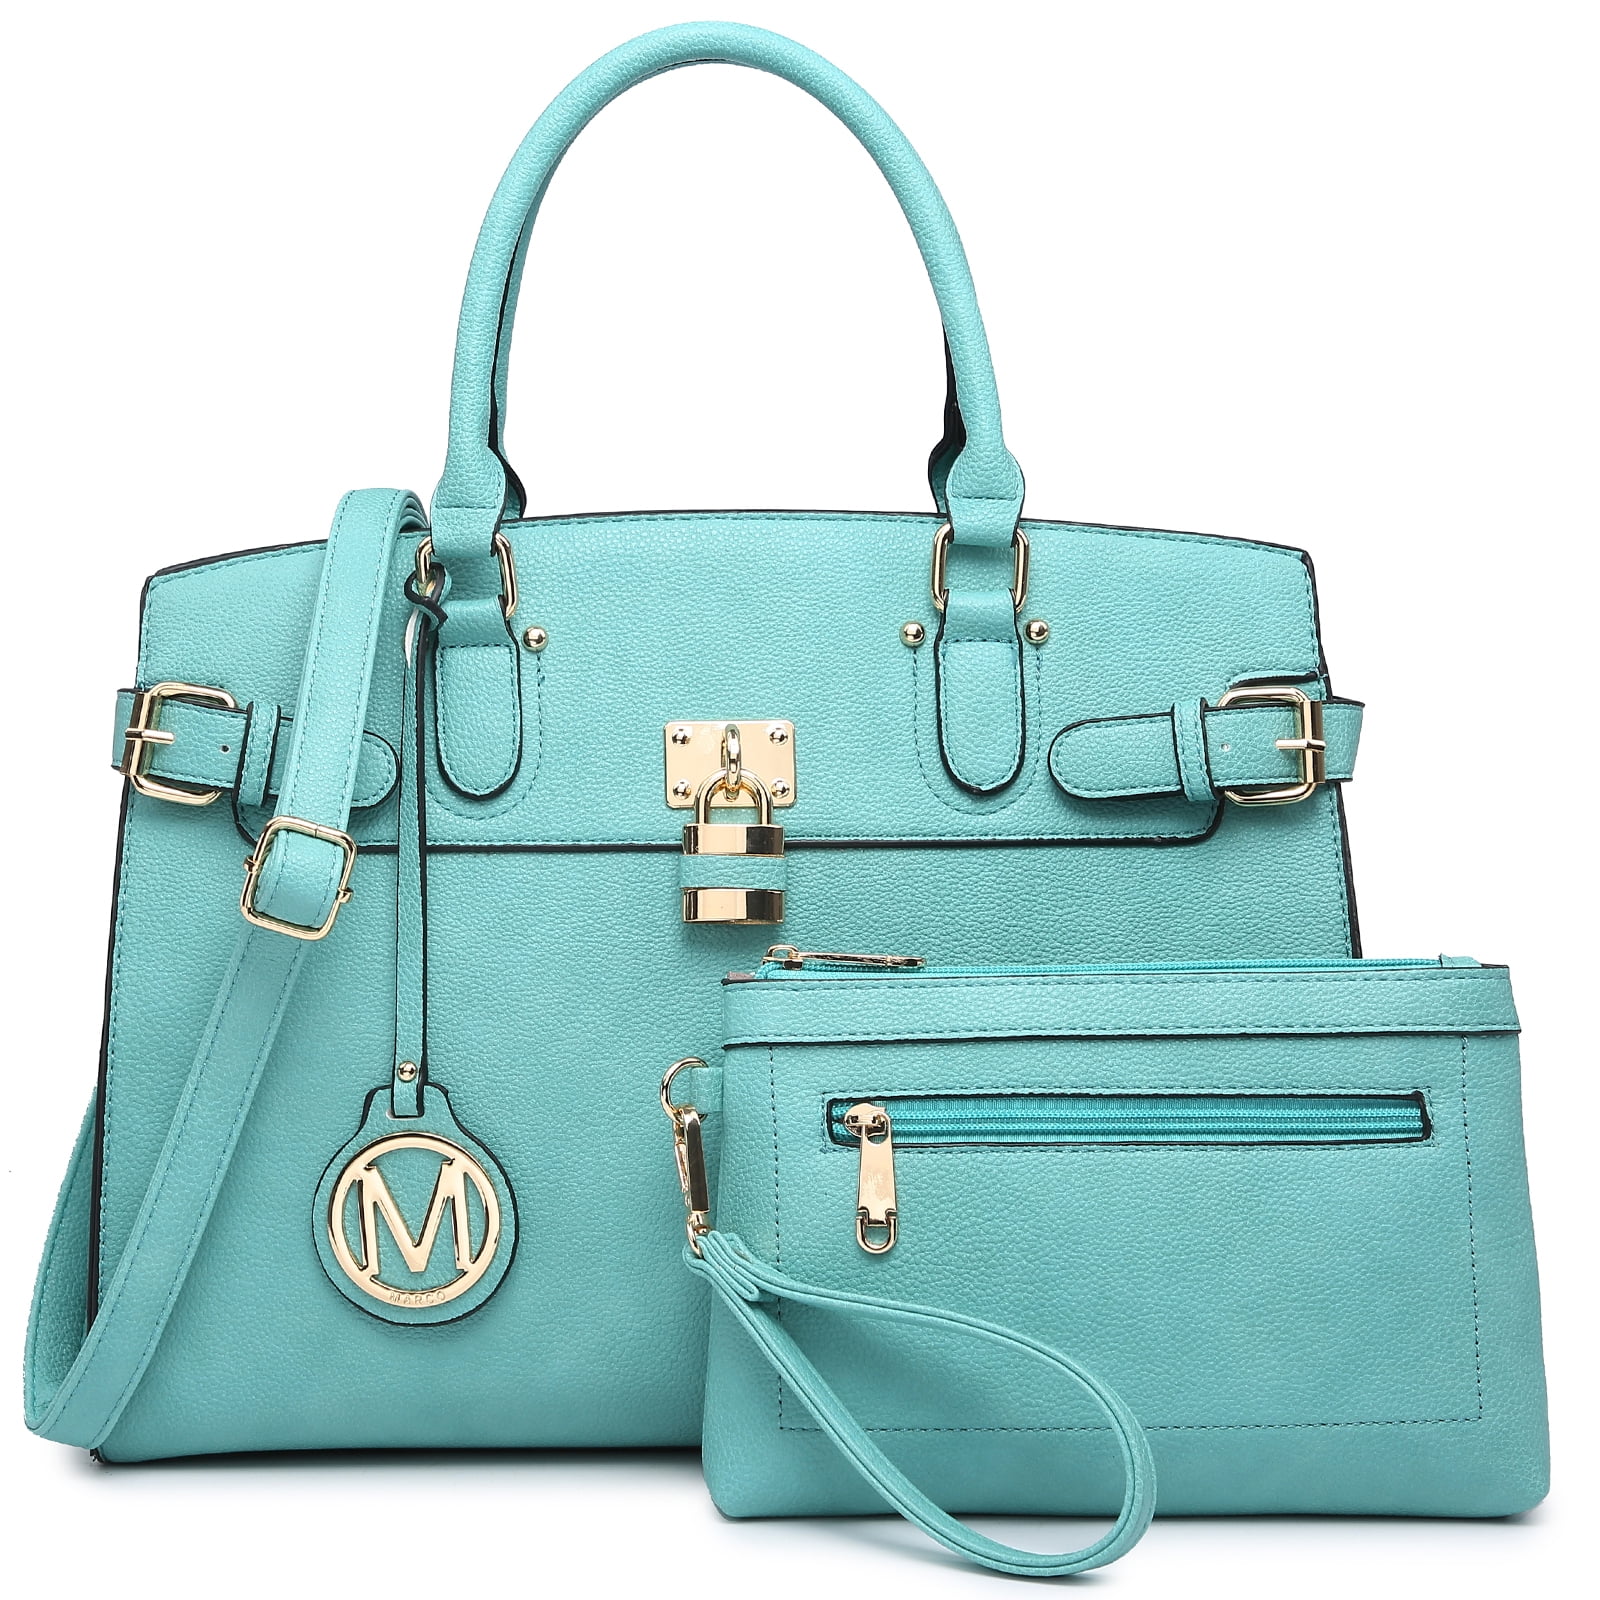 MKP Female Satchel Handbags Shoulder Tote Top Handle Bags with Matching ...